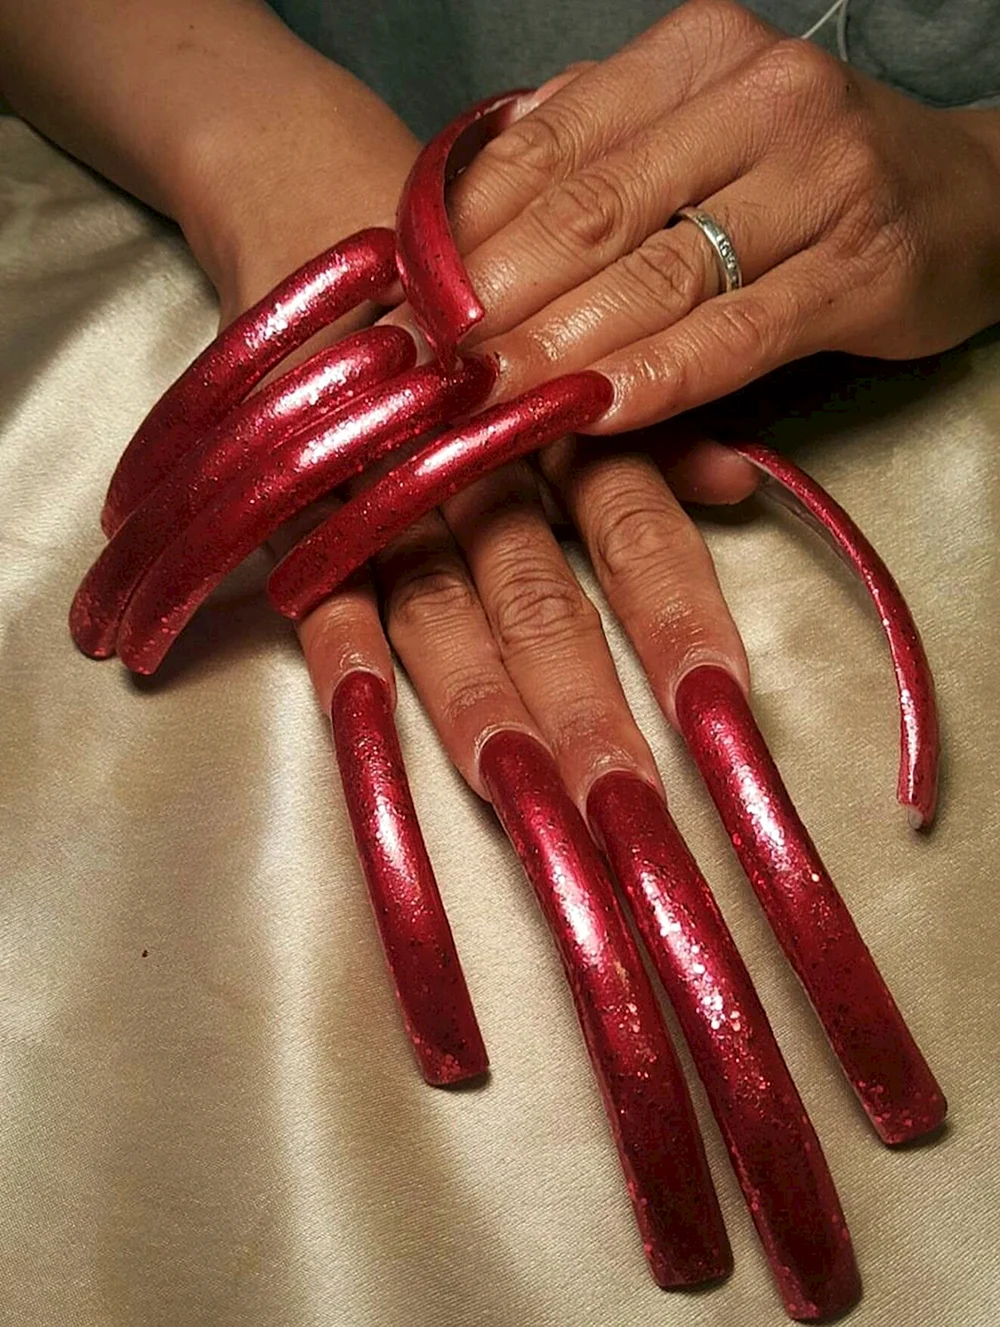 Trixie long Nails